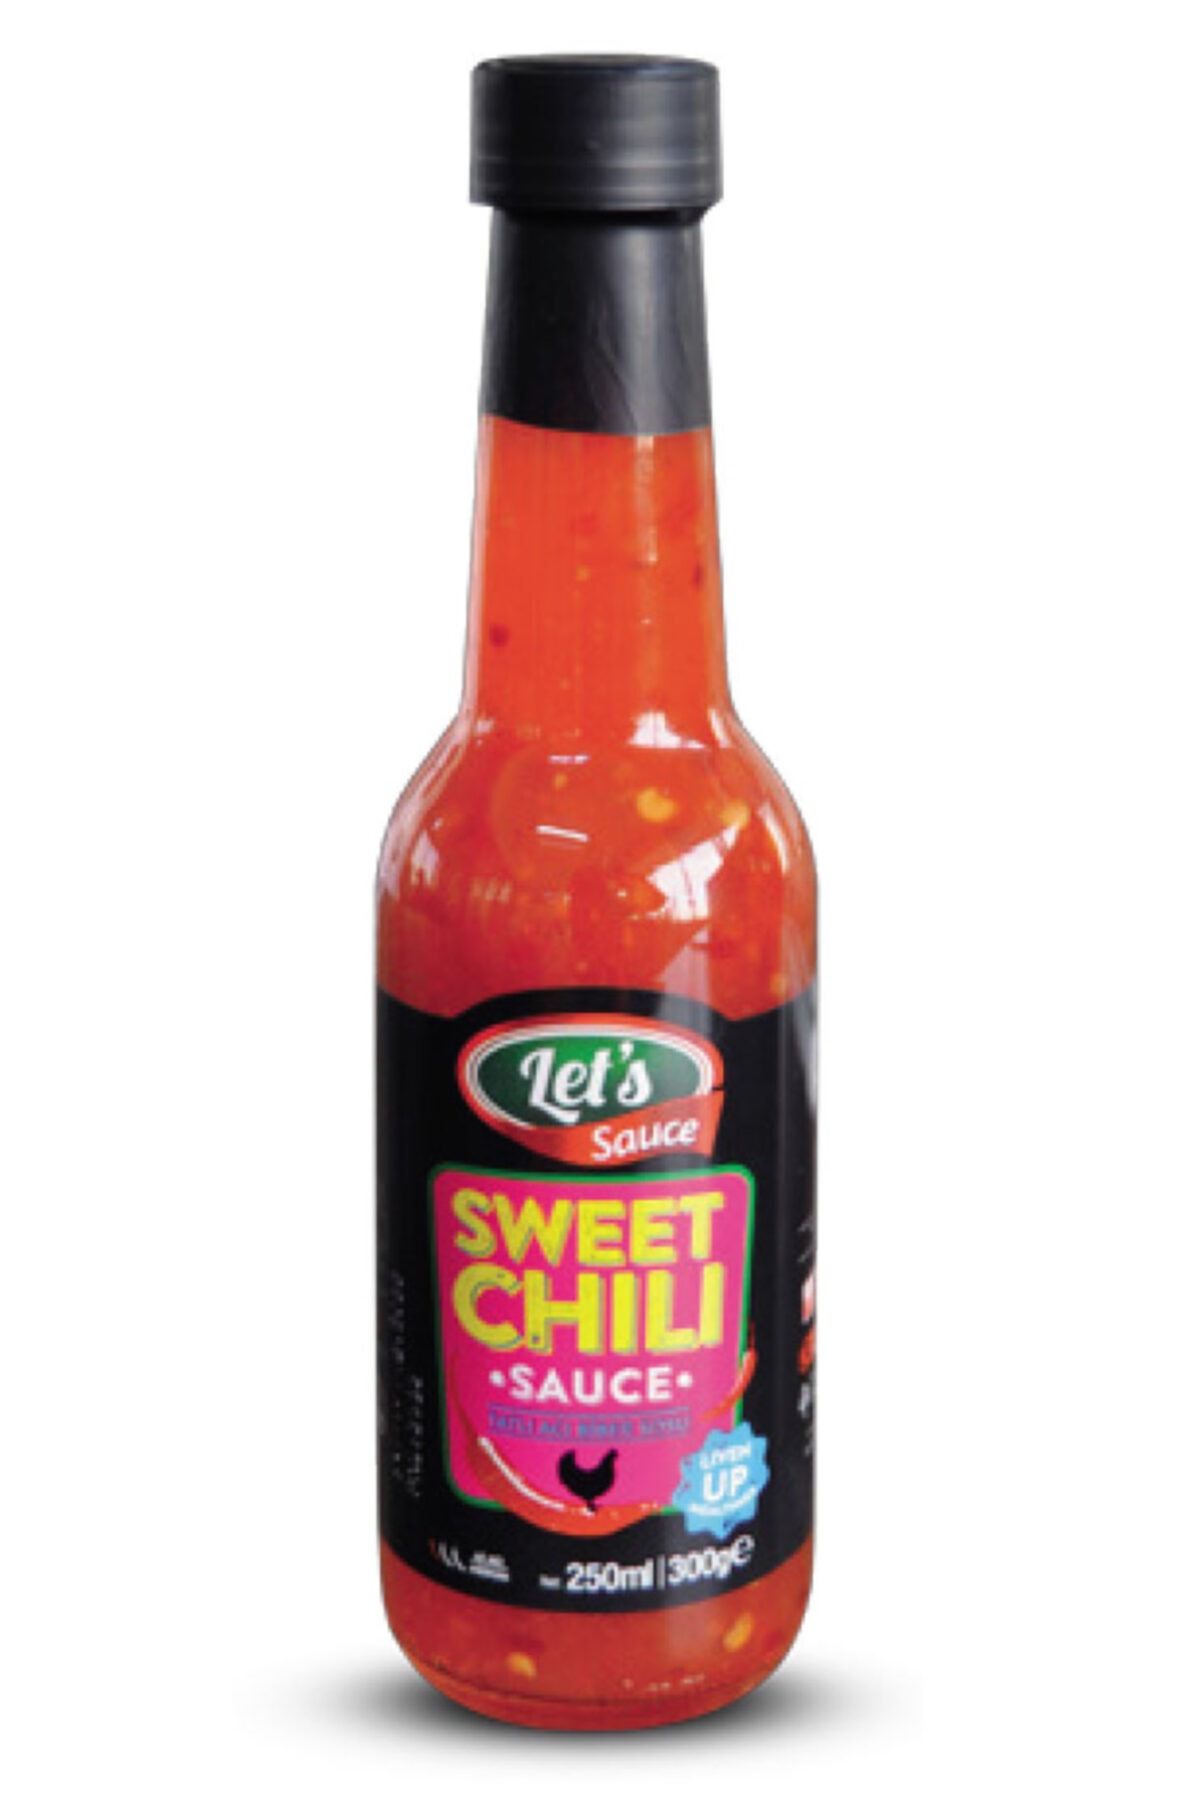 Let's Sauce Sweet Chili Sos 250 ml